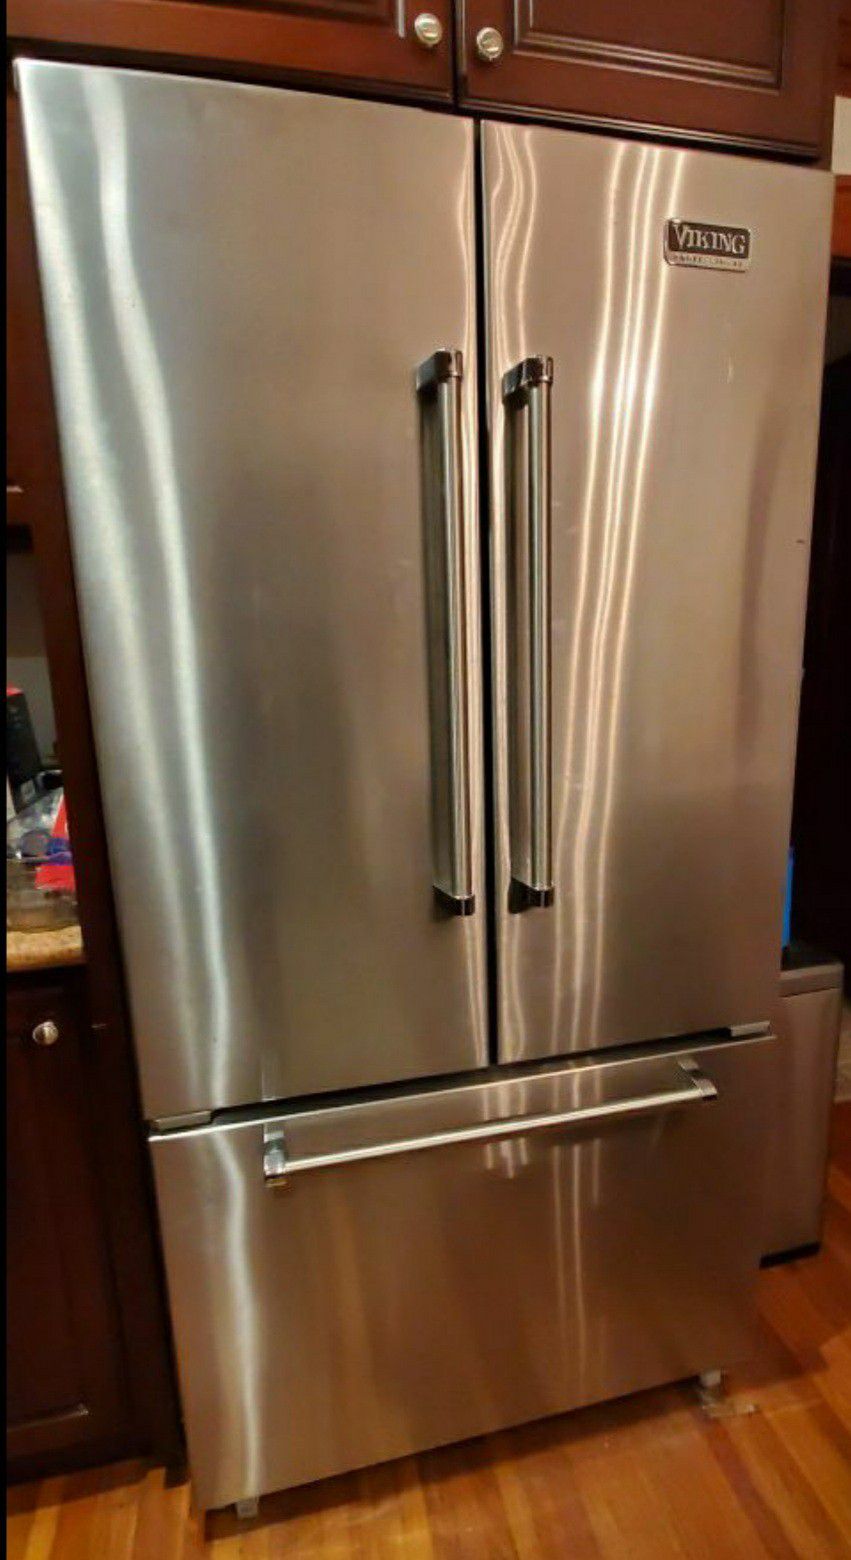 36" Viking refrigerator